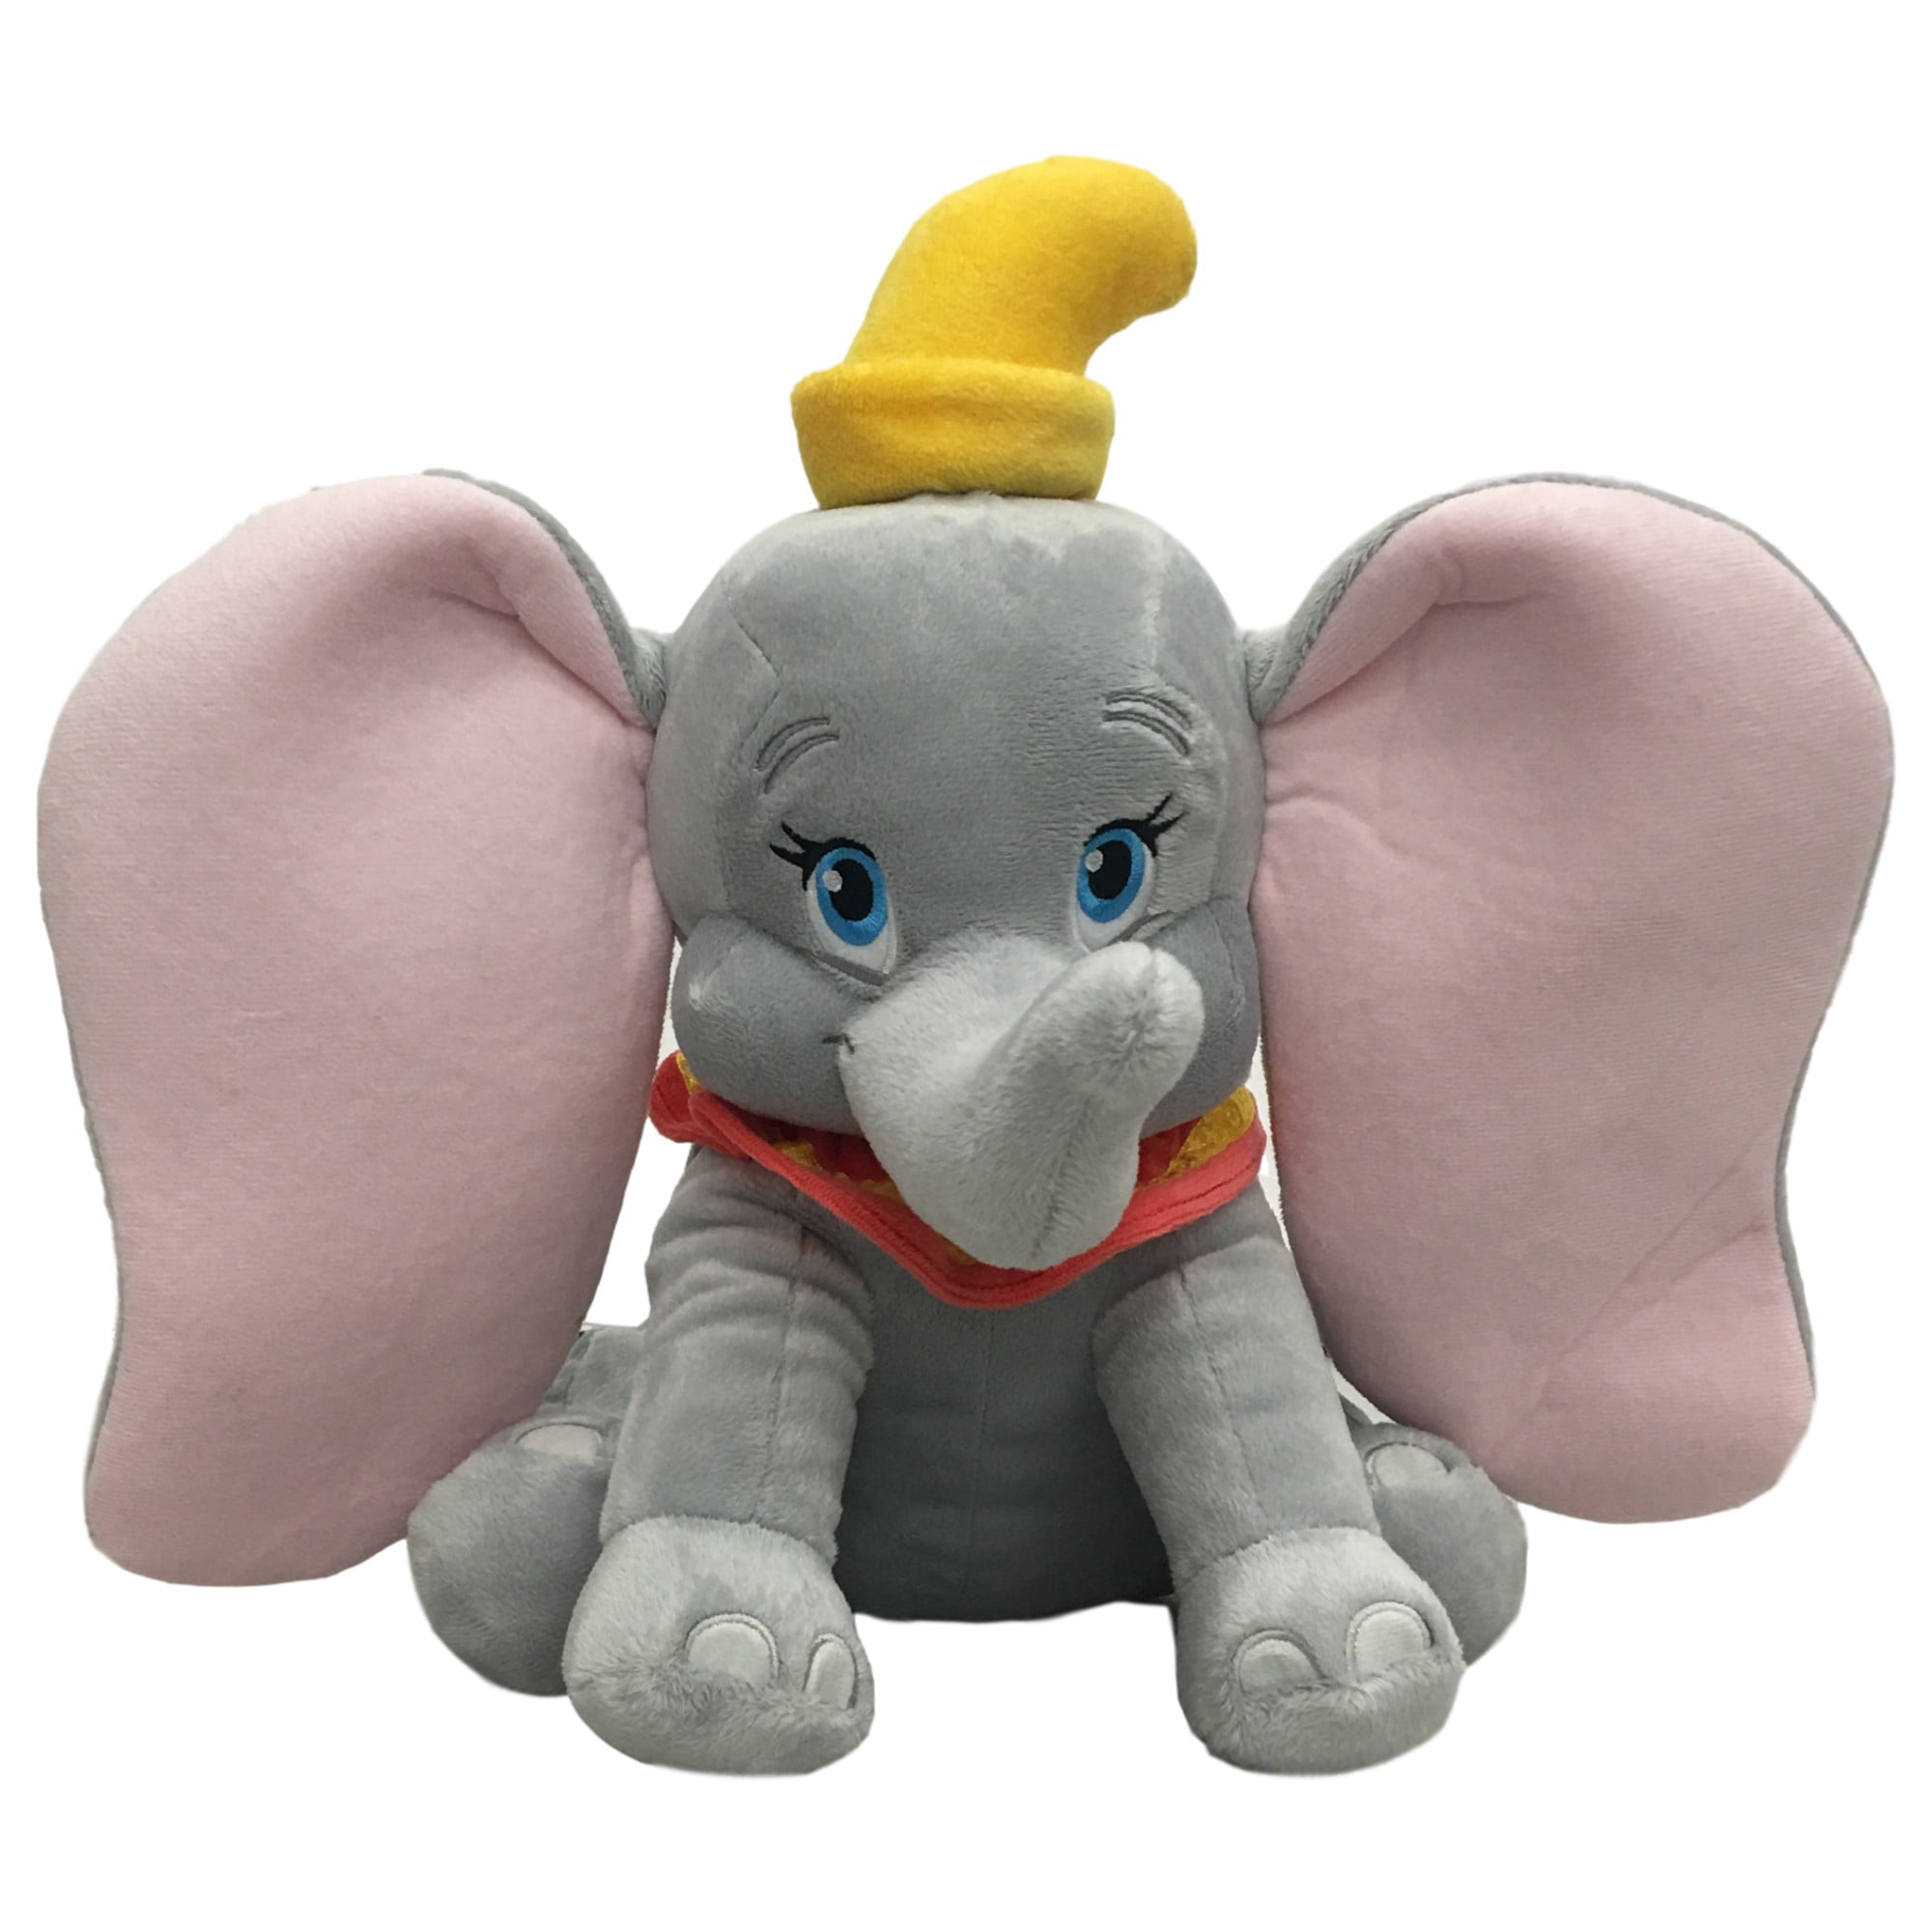 Disney Dumbo 14 inch Plush Elephant Stuffed Animal Pal 